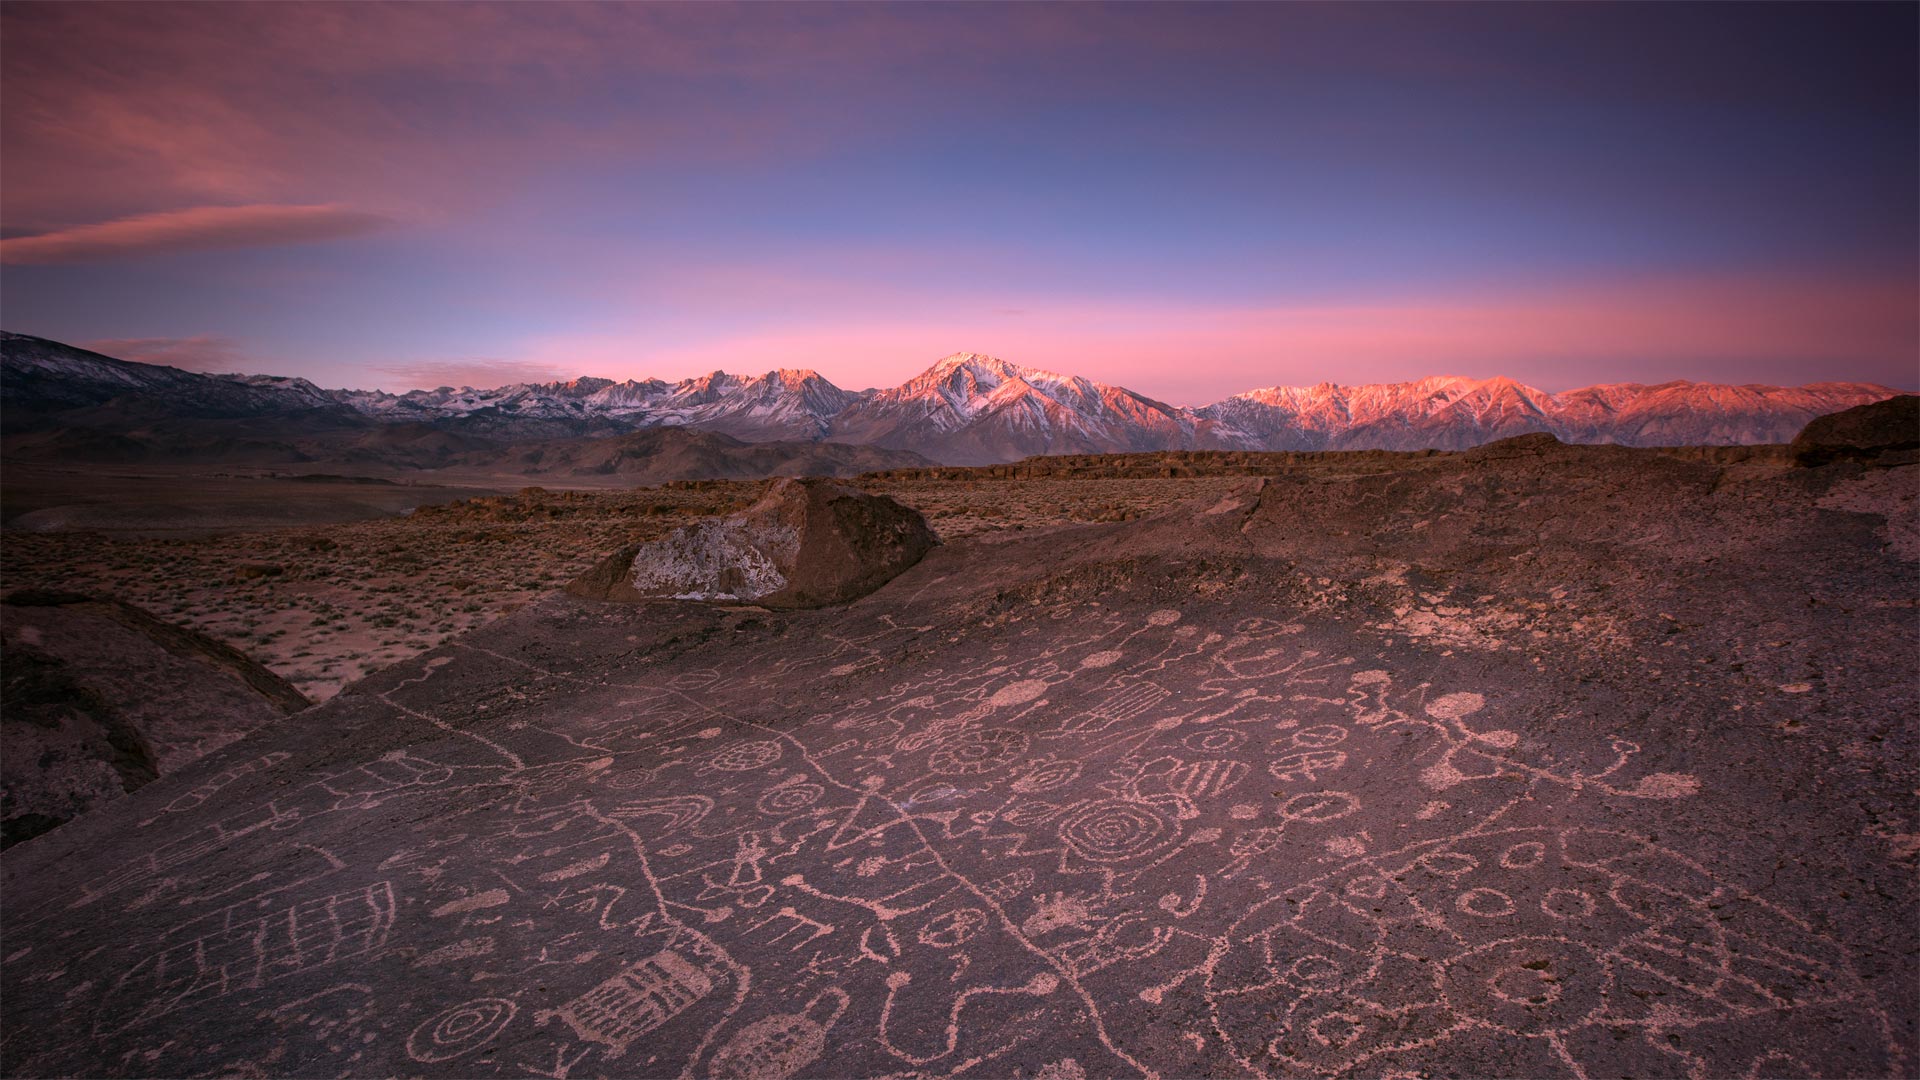 Sky Rock petroglyphs in the Volcanic Tablelands near Bishop, California - JTBaskinphoto/Getty Images)